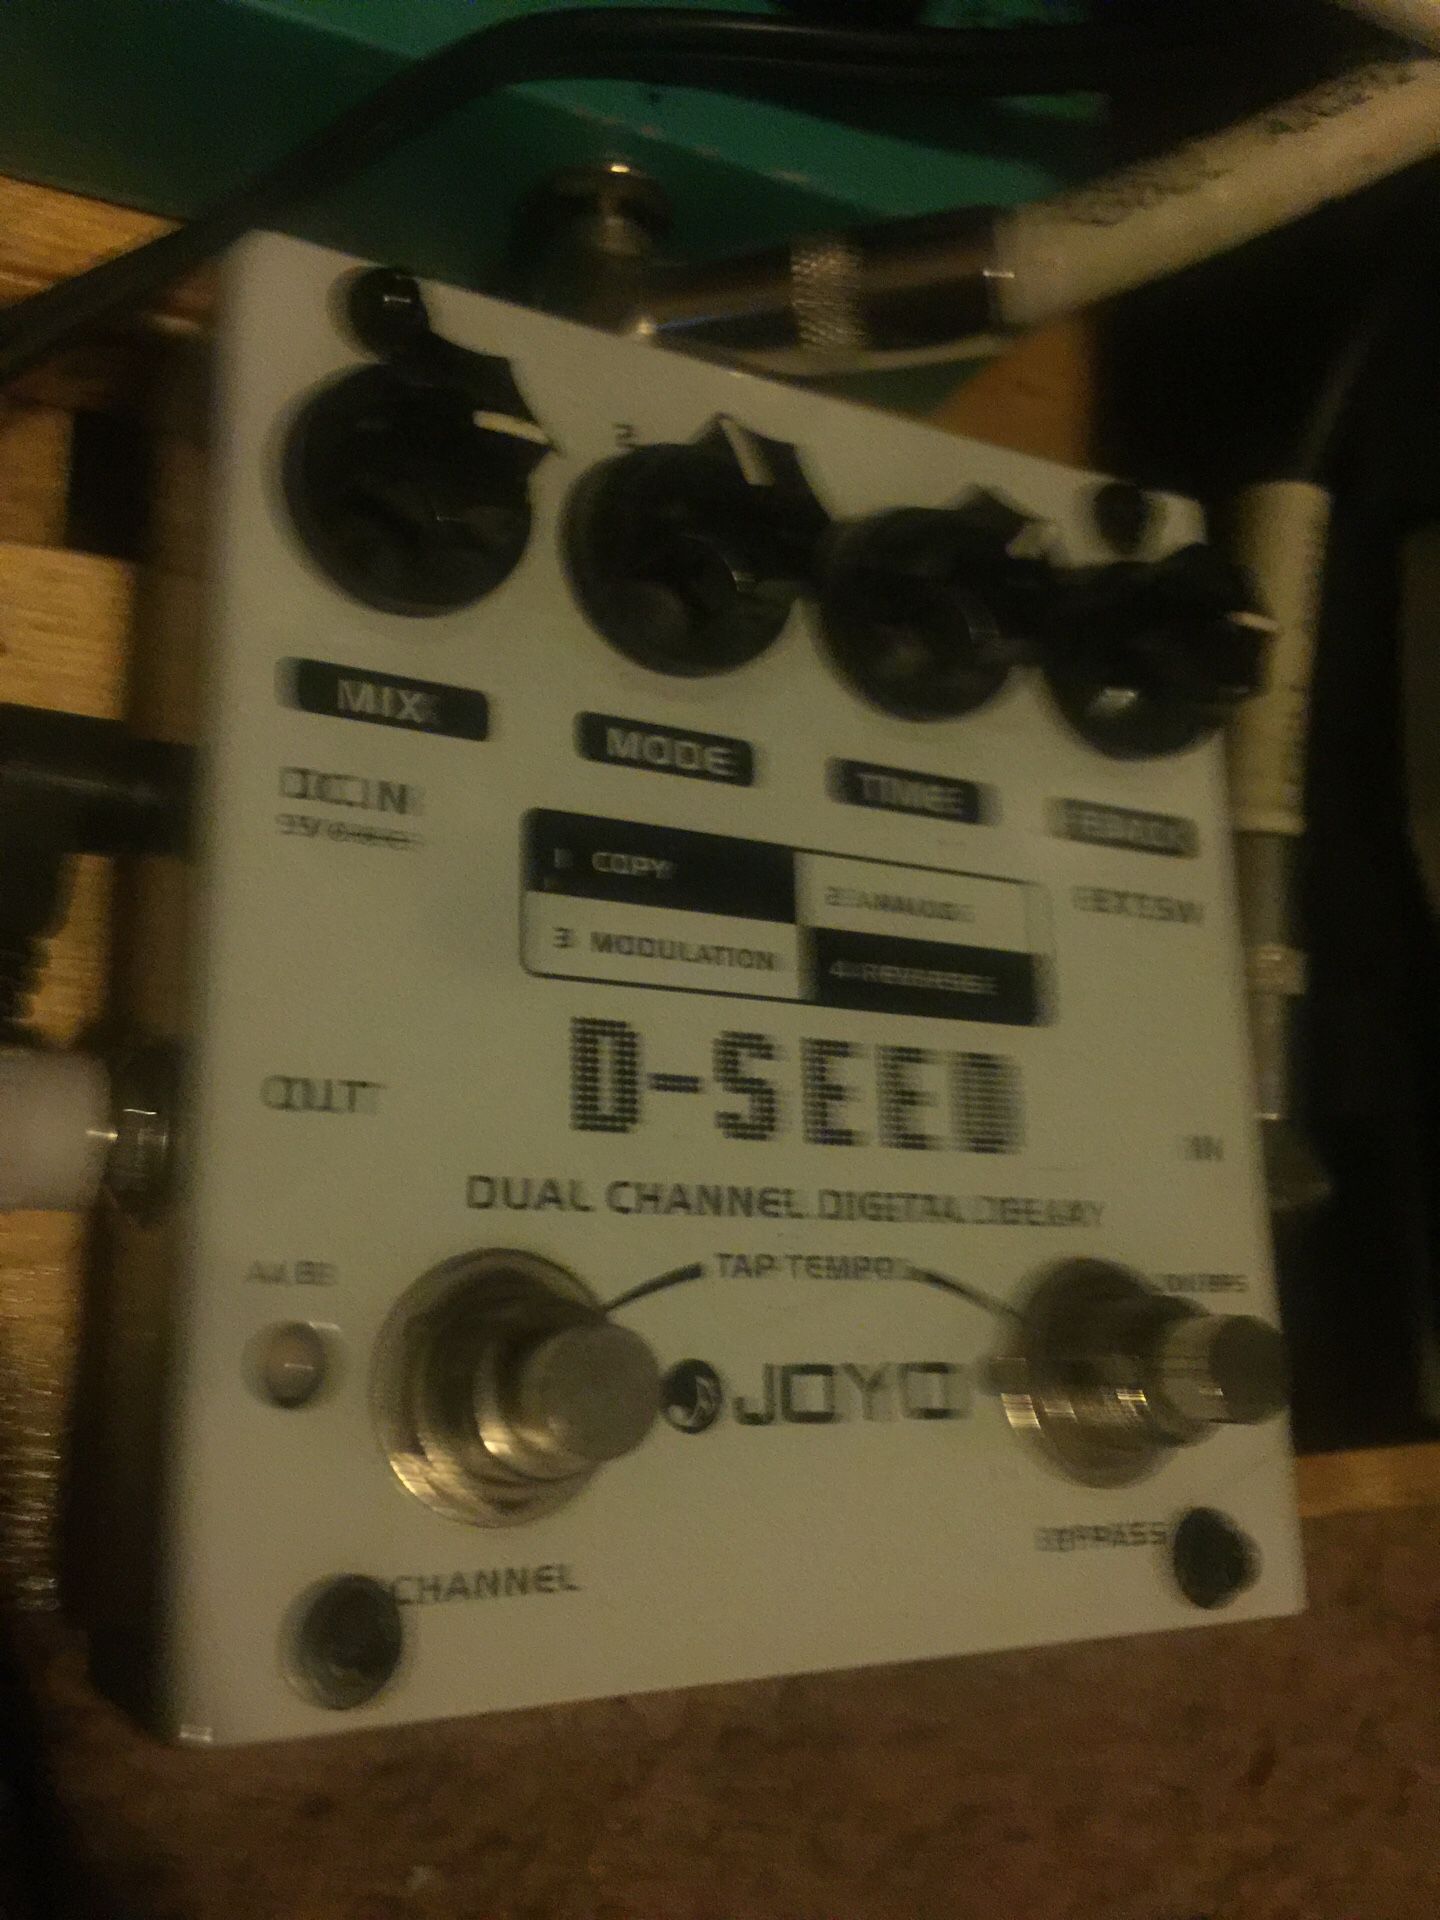 Joyo D-seed dual channel digital delay pedal